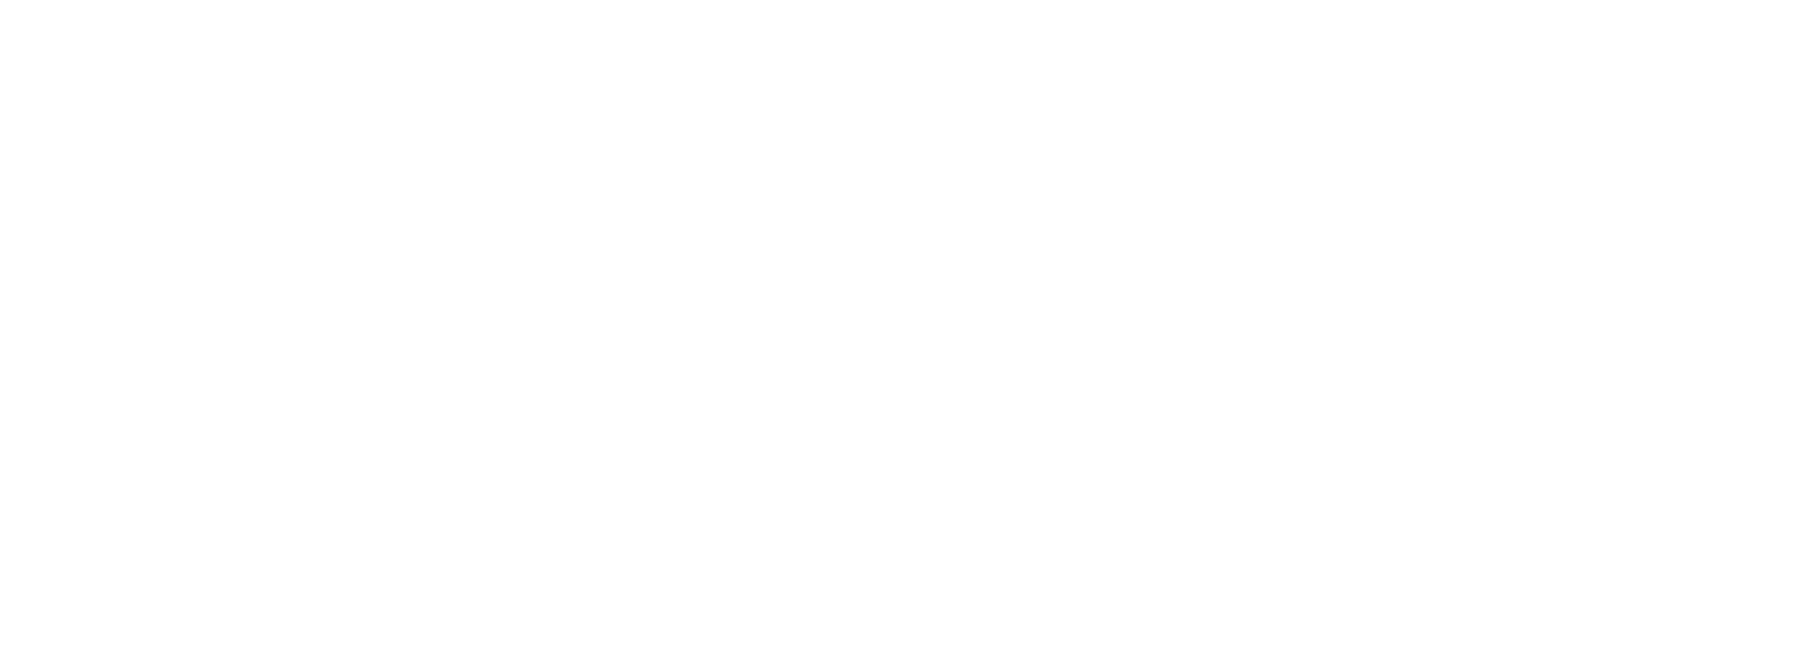 Sares by Kristin Sarstedt